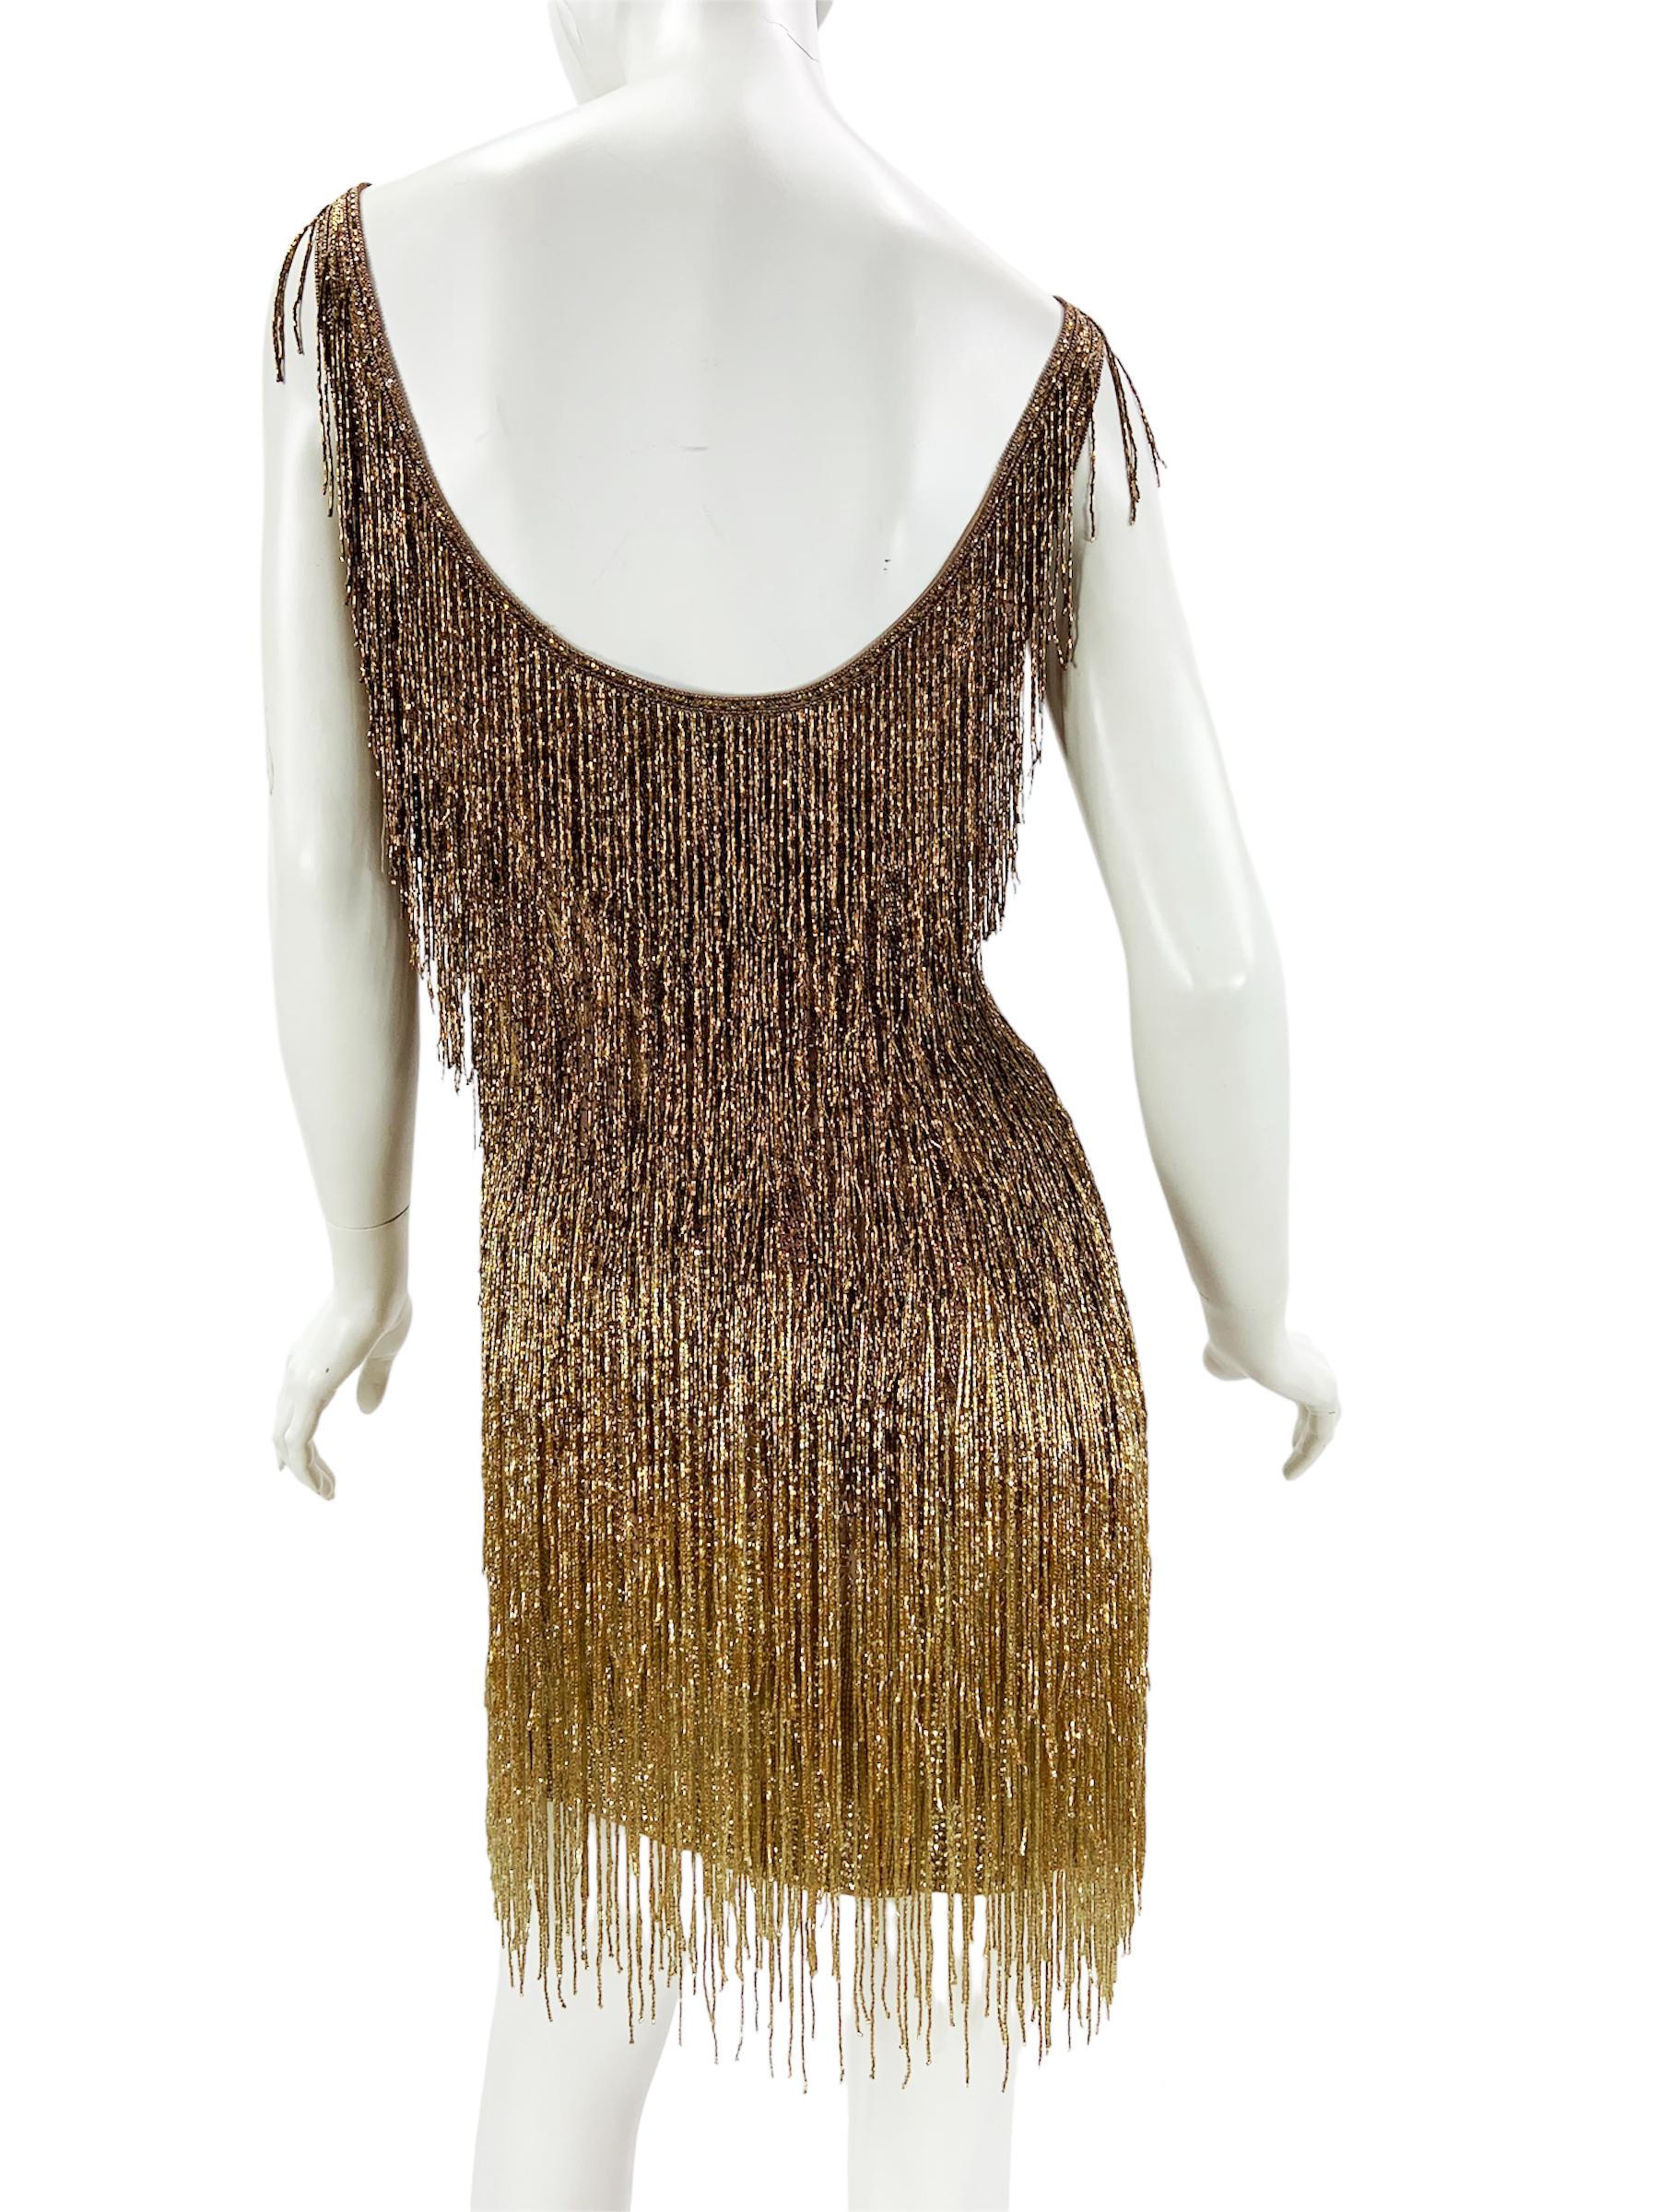 Iconic MUSEUM Roberto Cavalli Fringe Beaded Dress as seen on TAYLOR SWIFT It. 40 2